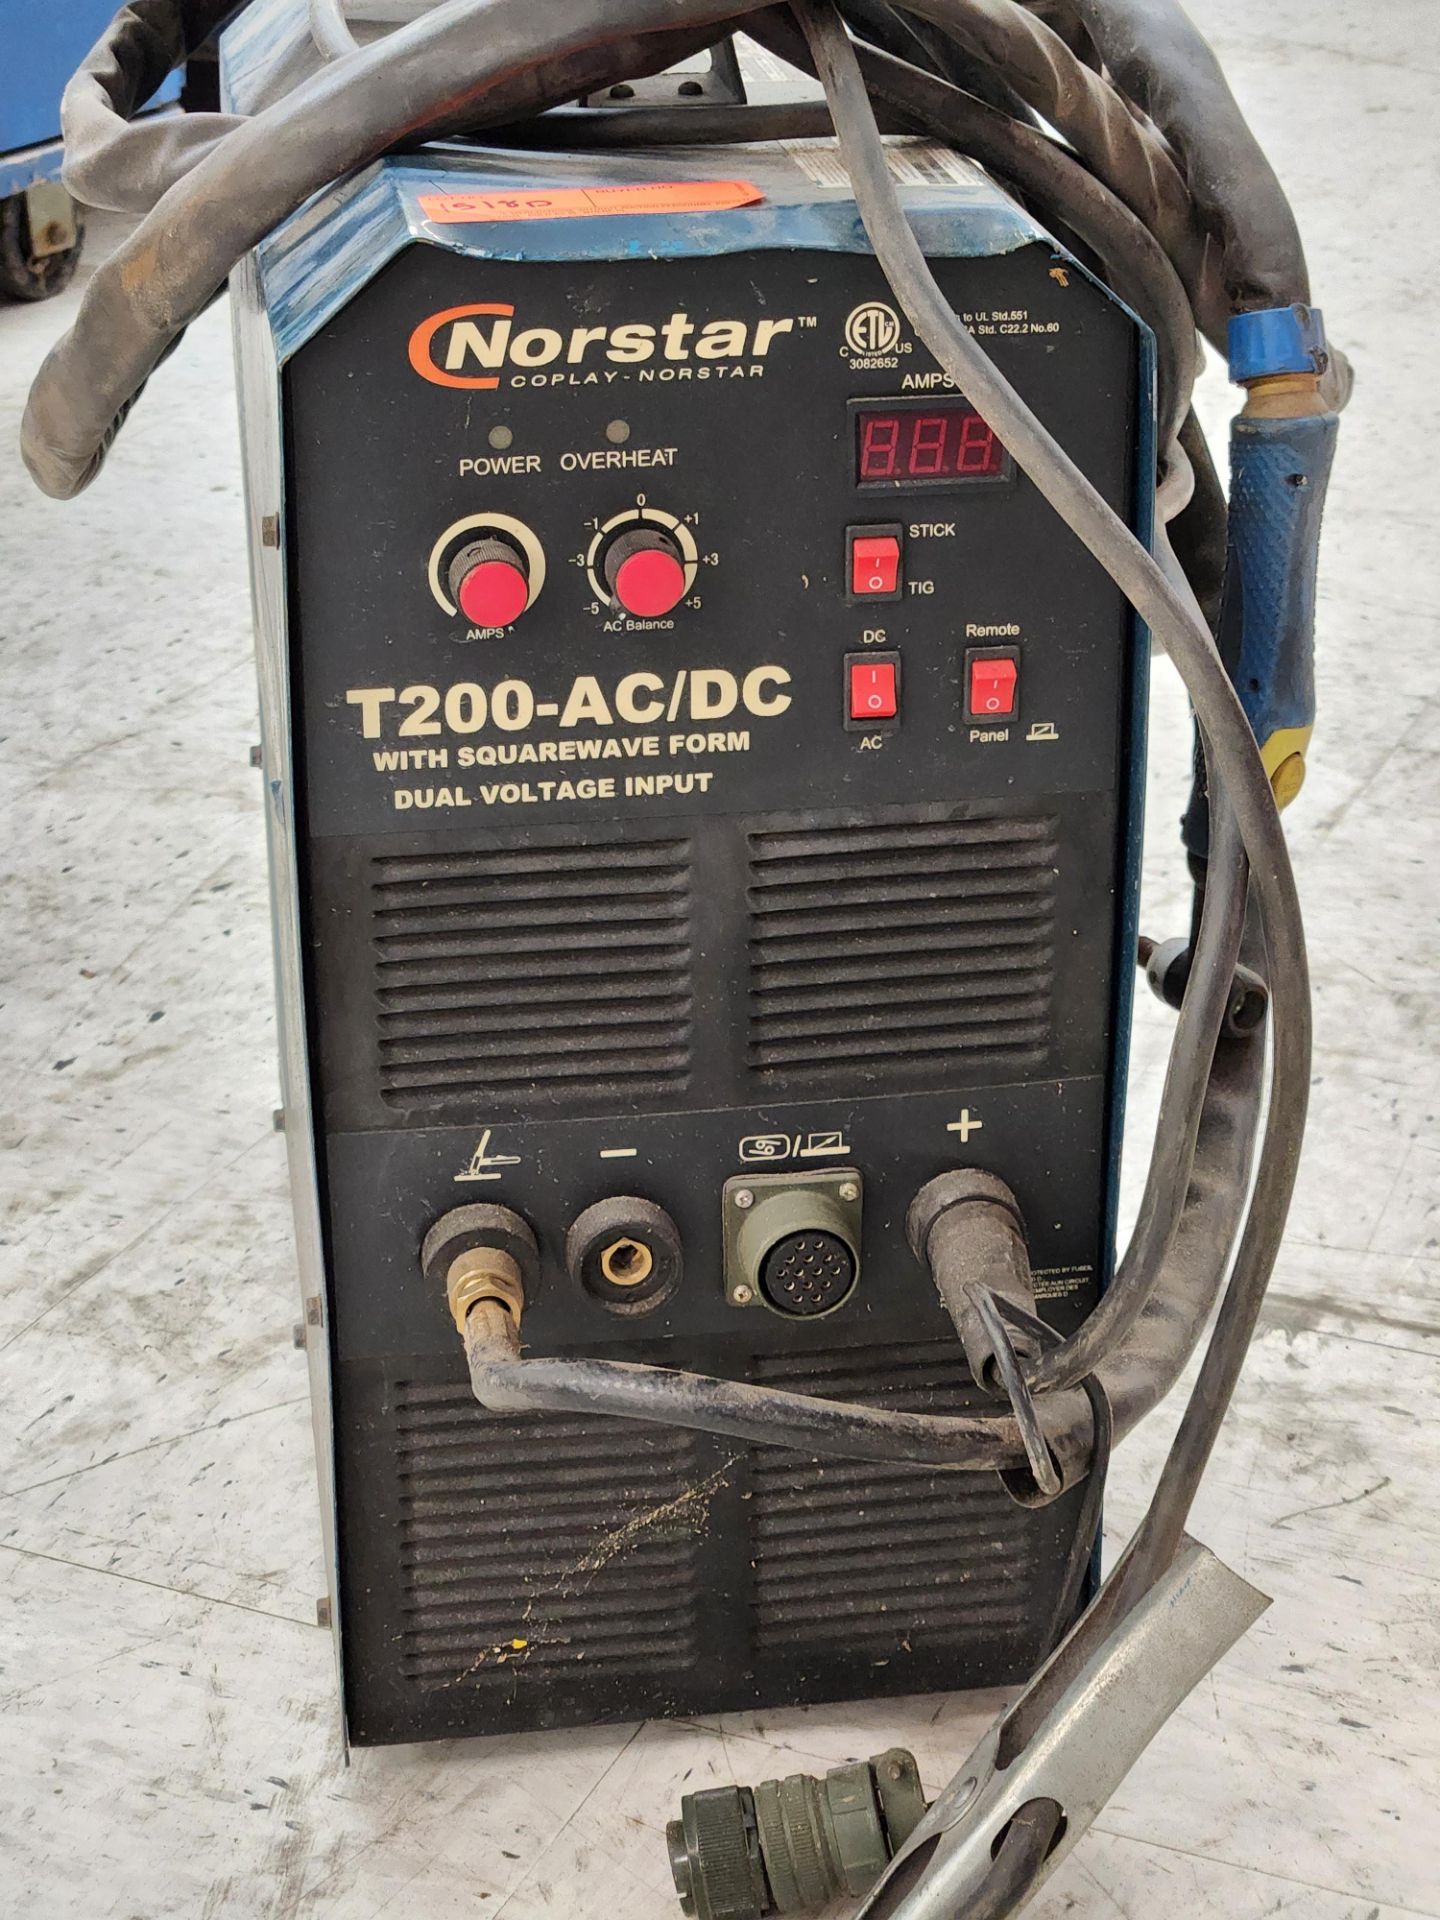 Norstar T200-AC/DC Welder - Image 2 of 4